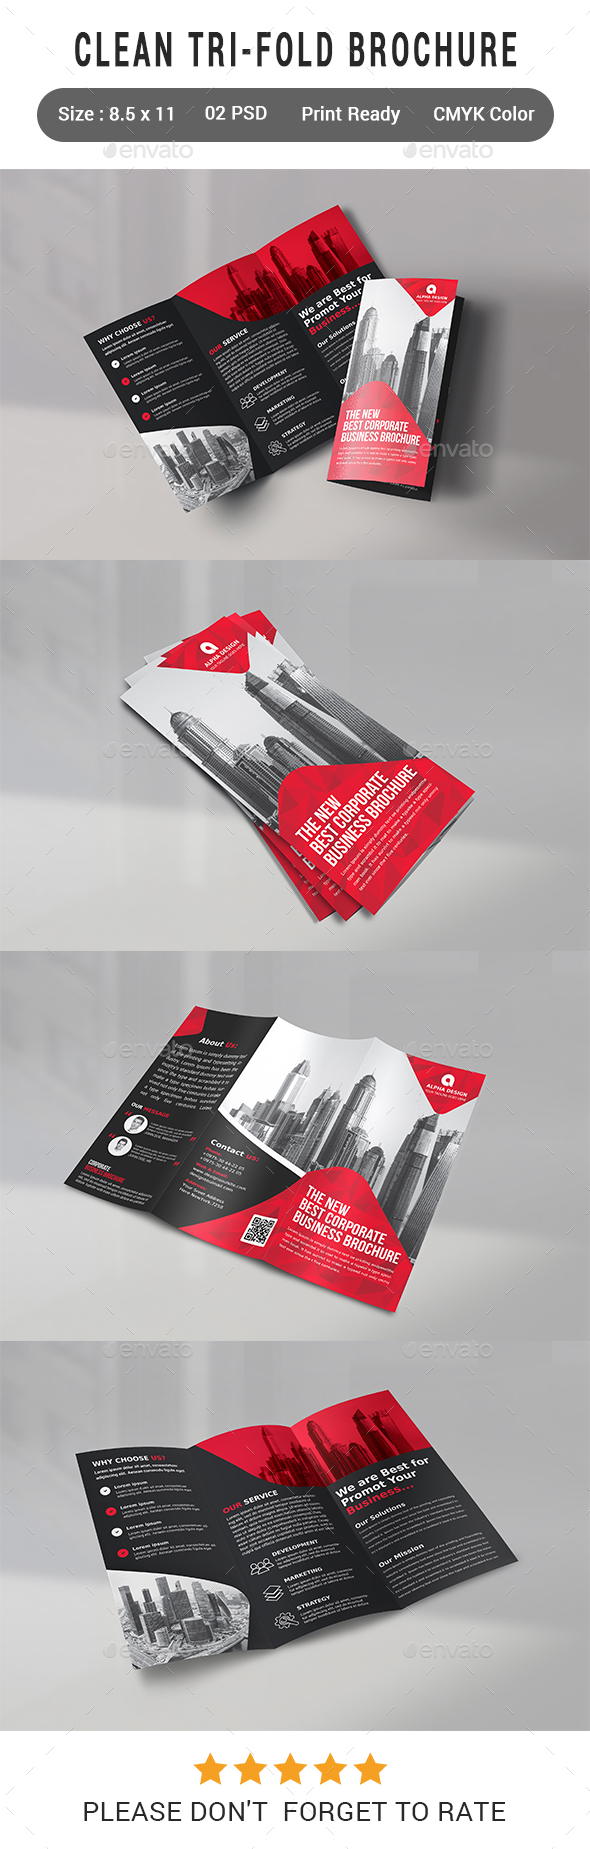 Clean Tri-fold Brochure in Brochure Templates